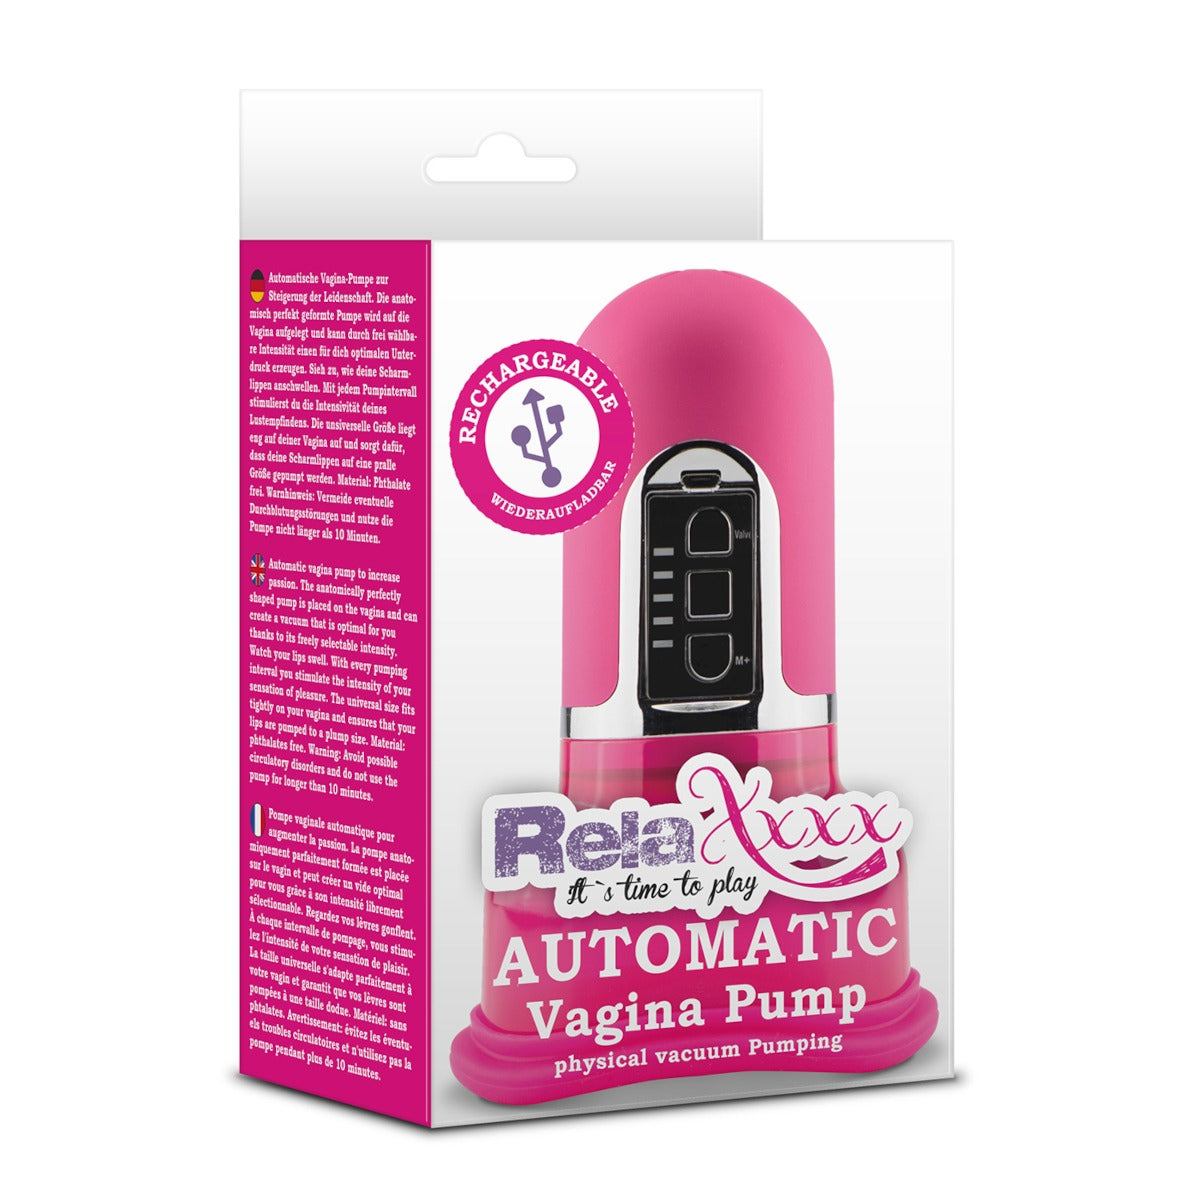 MVW Relaxxxx Automatic vagina pump - USB rechargeable